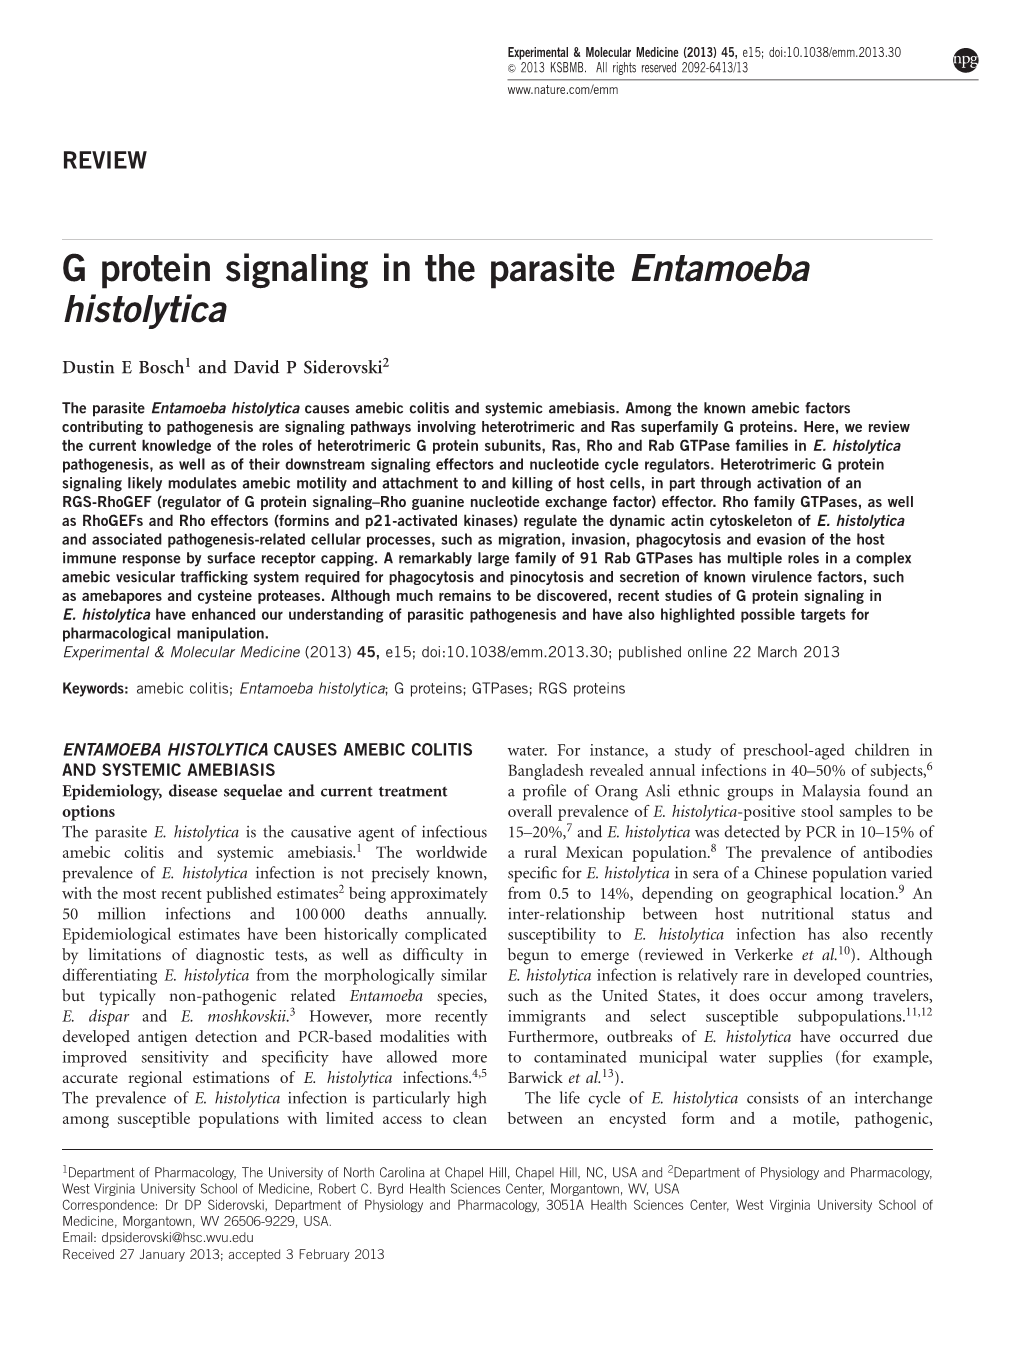 G Protein Signaling in the Parasite Entamoeba Histolytica